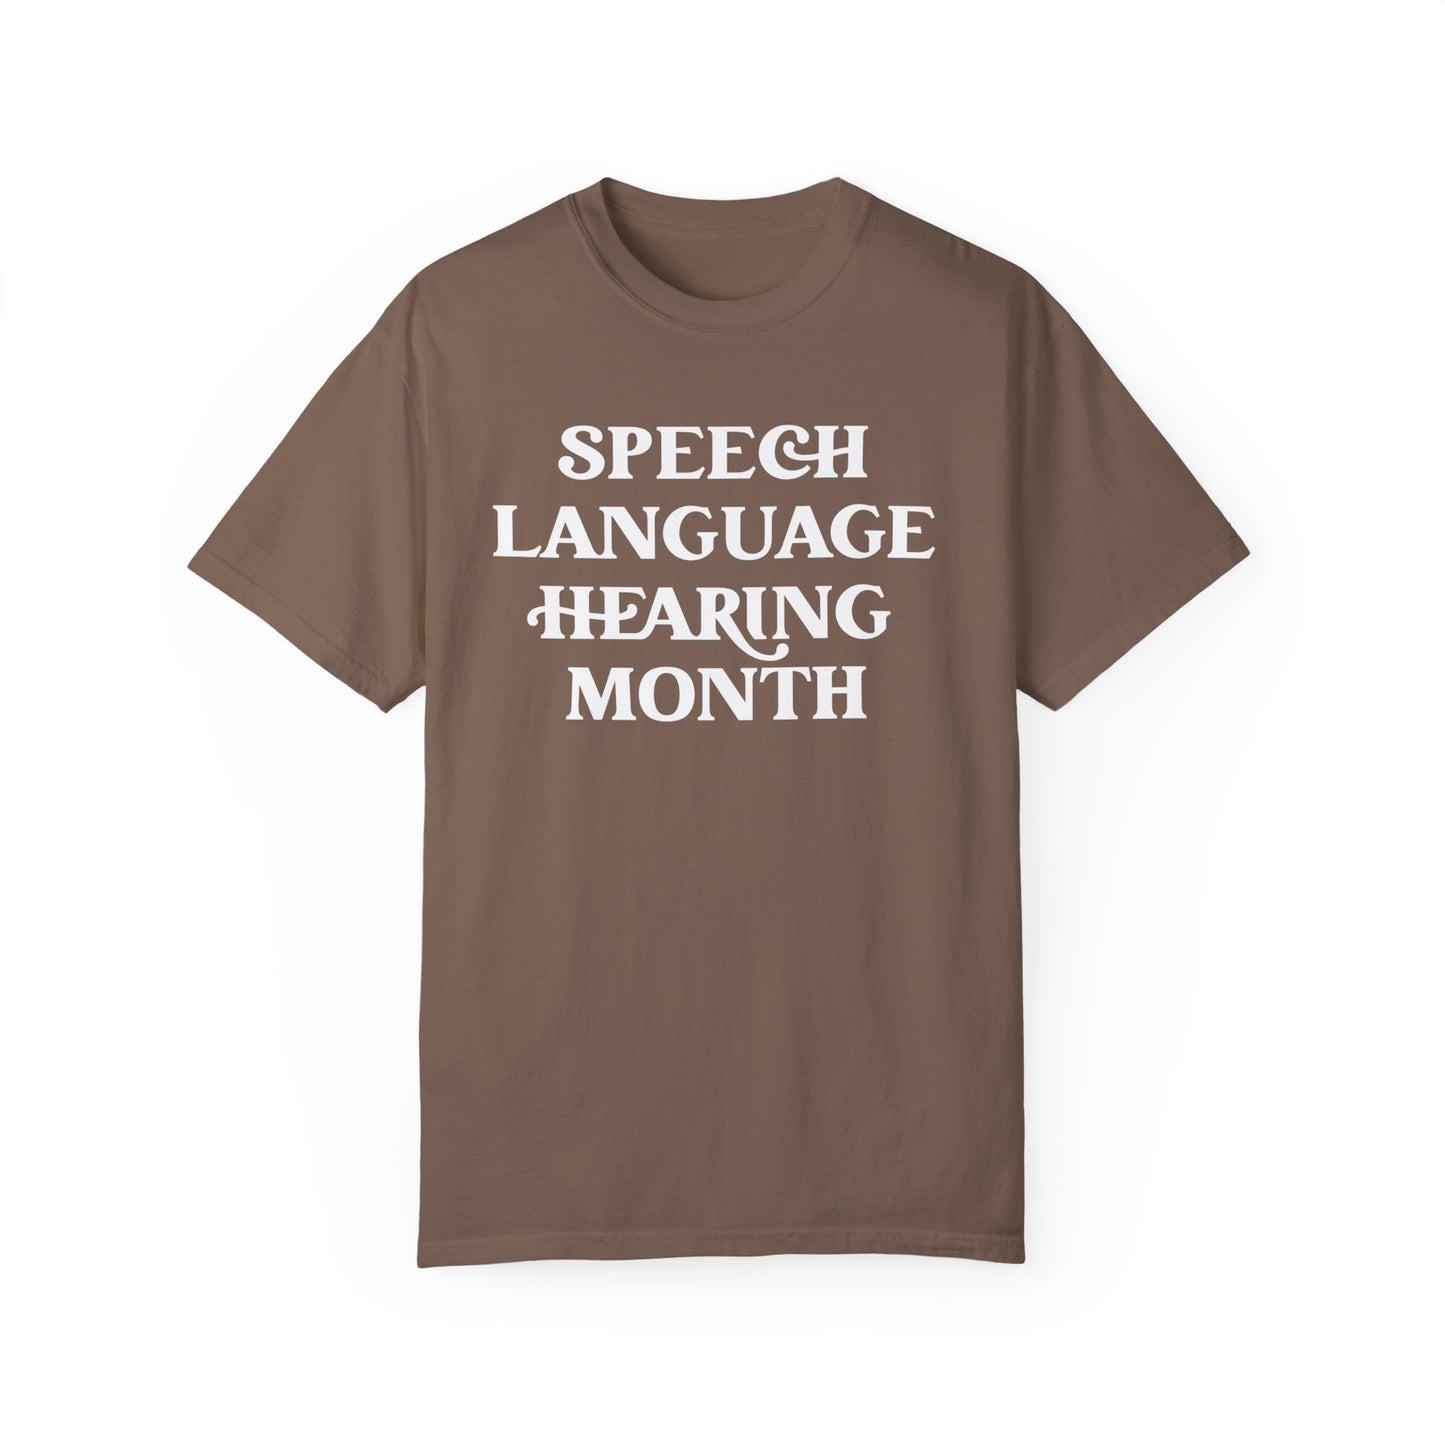 Speech Language Hearing Month Tee (Comfort Colors)